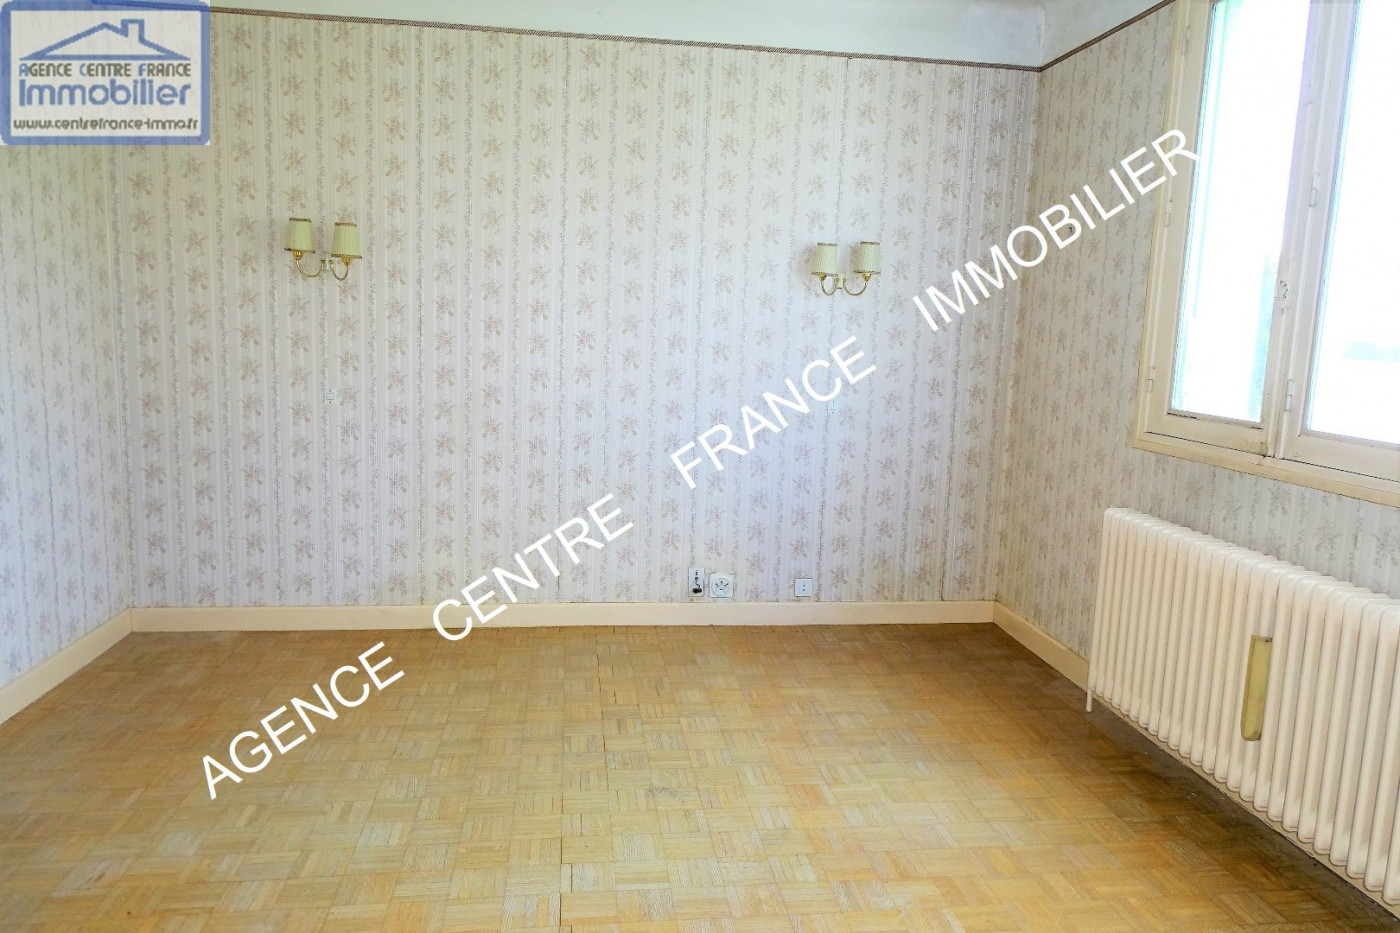 A vendre  Bourges | Réf 030011536 - Agence centre france immobilier